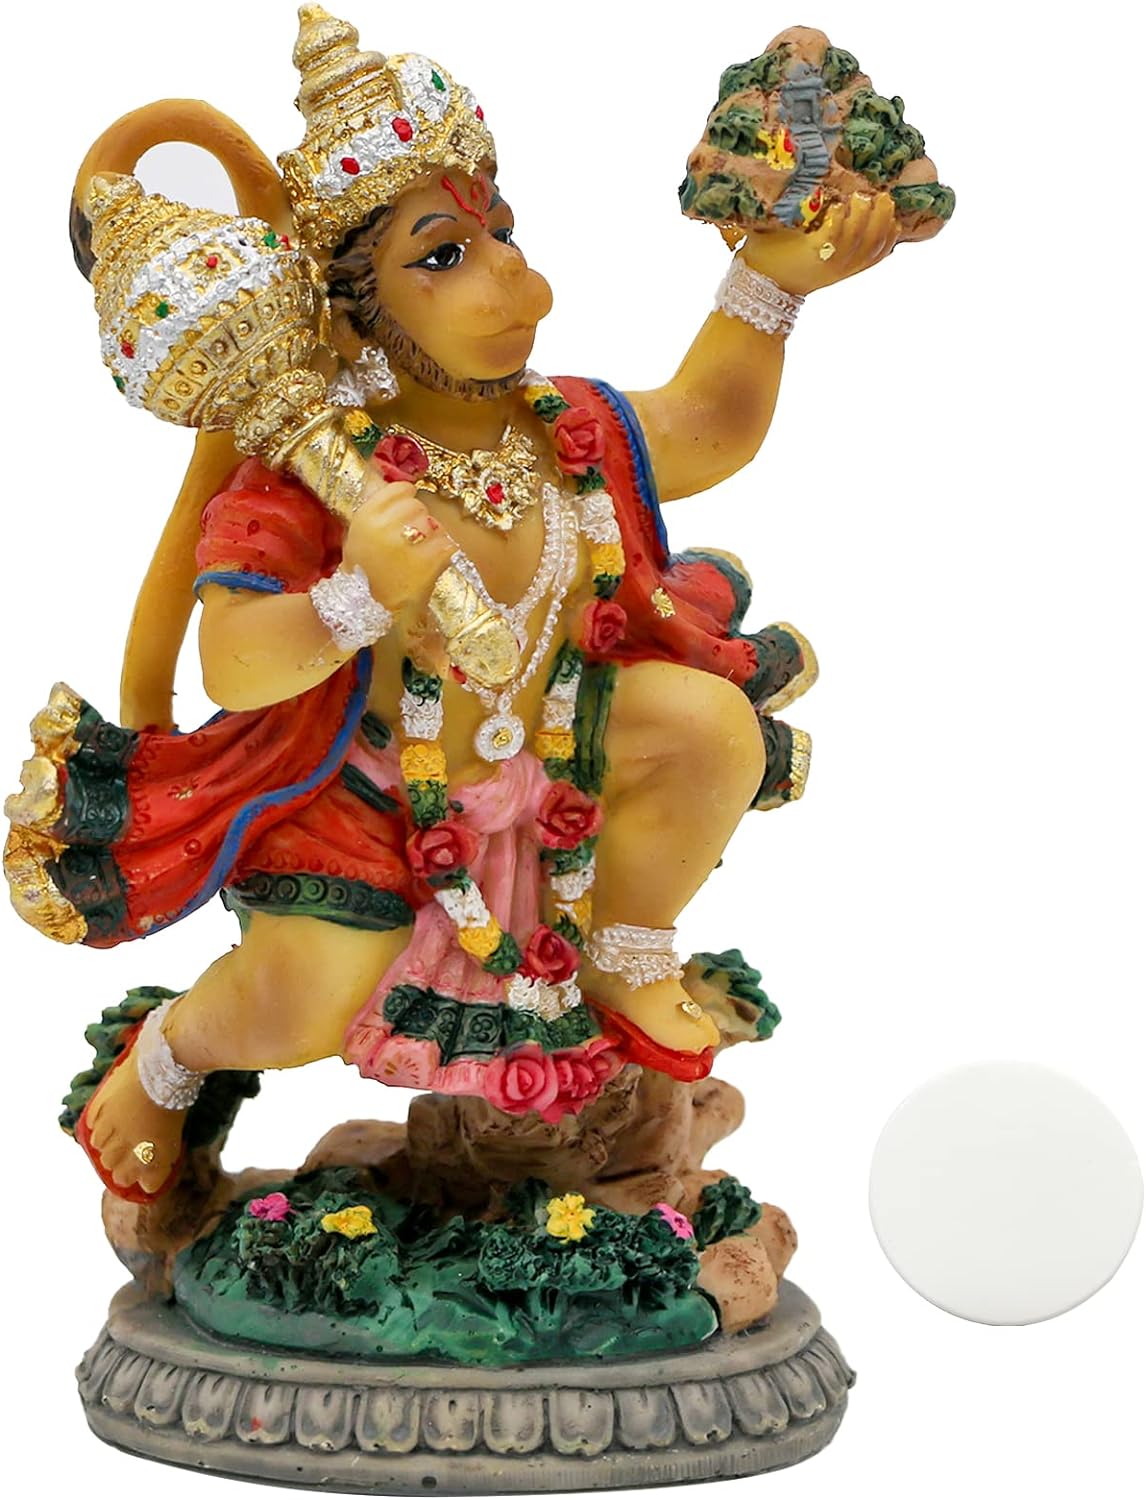 alikiki India Idol Lord Hanuman Statue - 3.9”H Hindu God Flying Hanuman Figurine for Car Dashboard Decor Indian Home Office Mandir Temple Altar Shrine Pooja Item Diwali Puja Gifts